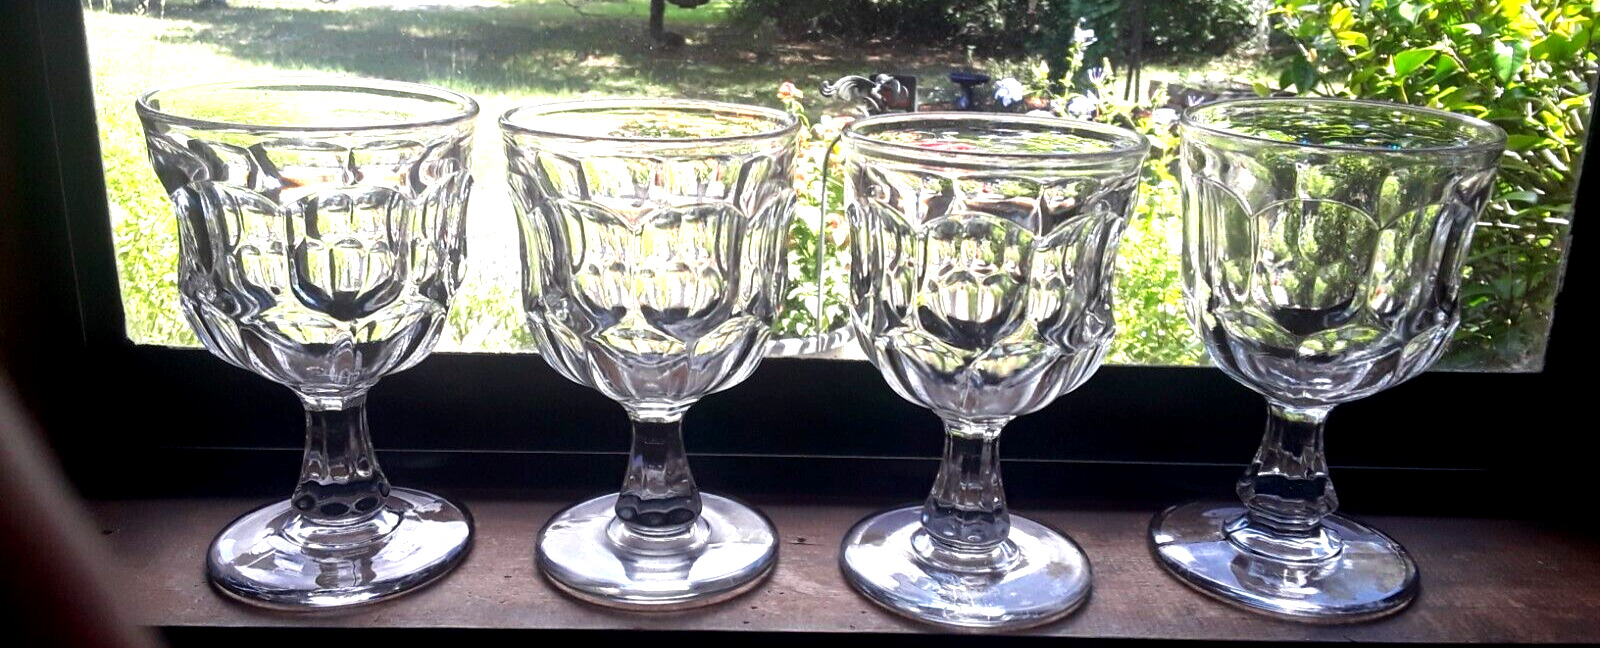 EAPG 12oz. ASHBURTON FLINT GLASS WATER GOBLETS - set of 4 - c. 1850s